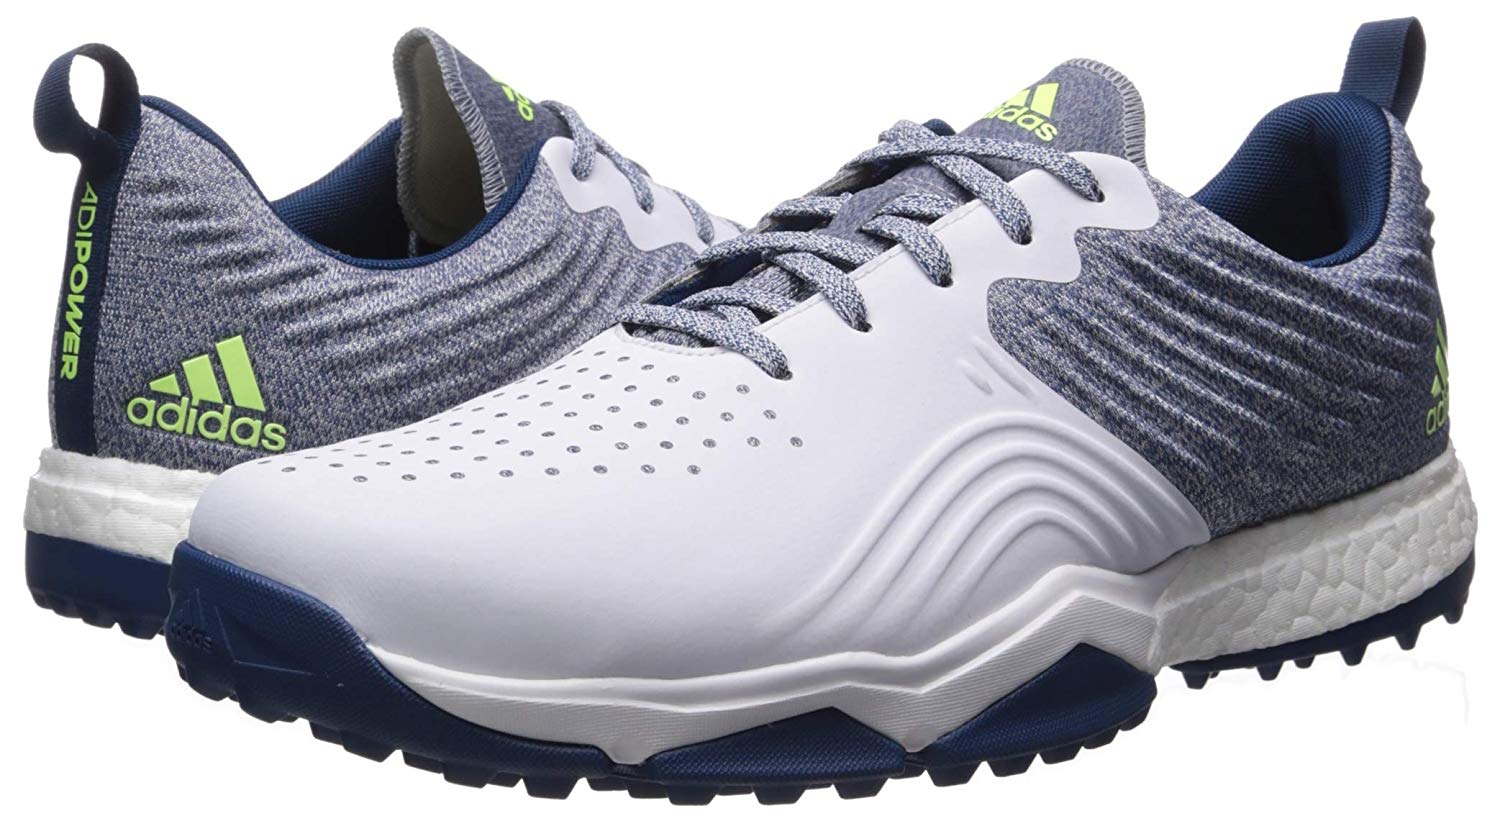 adidas Men's Adipower 4orged S Golf Shoe, White, Size 14.0 925l | eBay